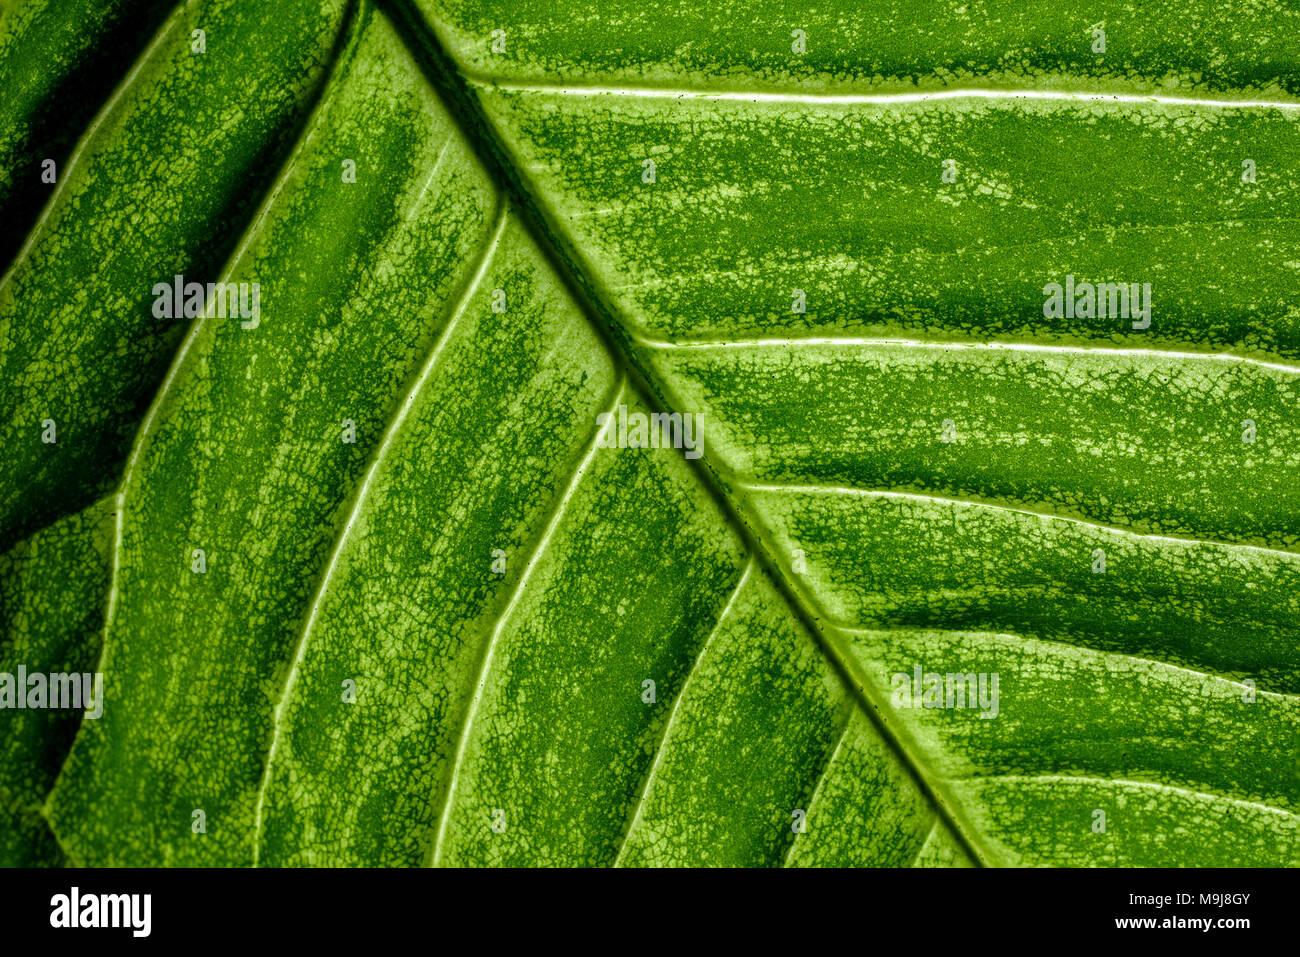 Green Caladium leaf closeup macro, texture and pattern Stock Photo